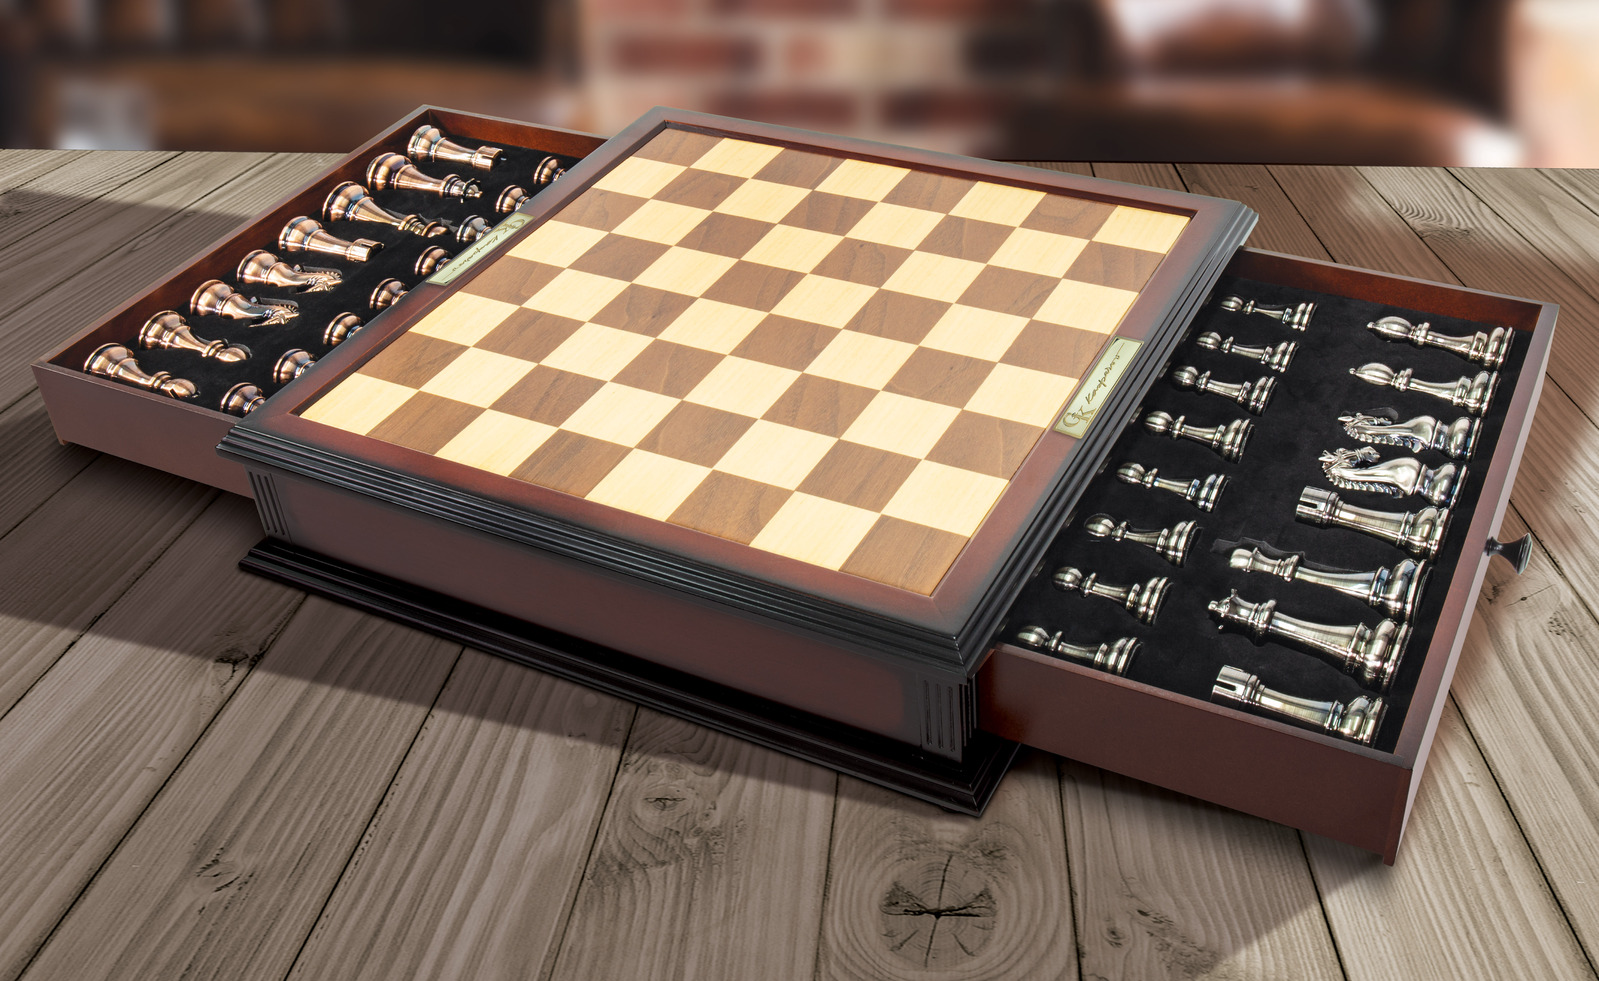 The Blackmore Grand Master Chess Set